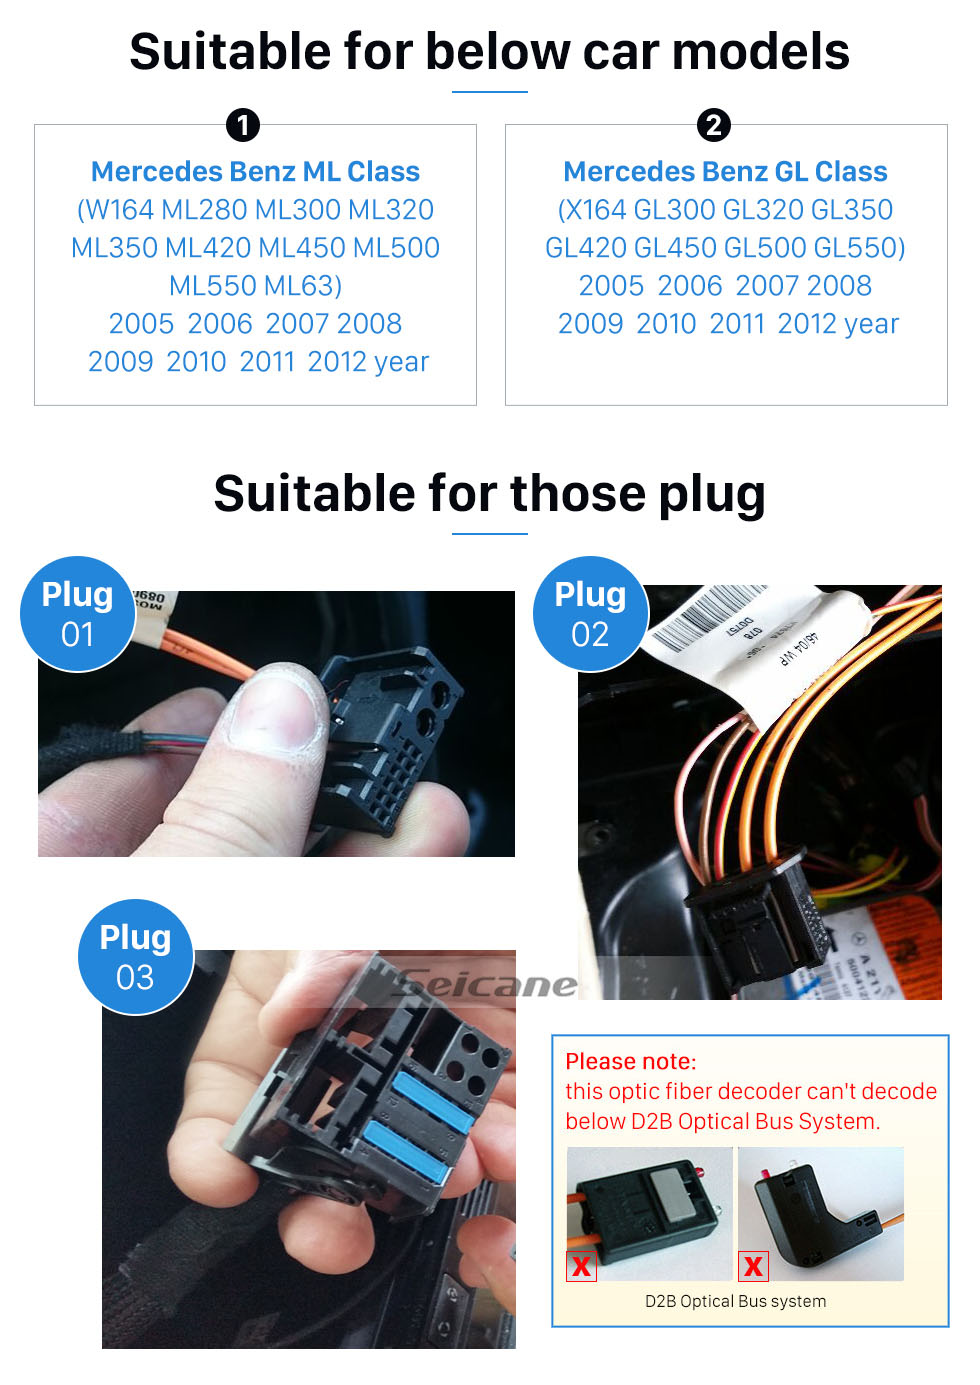 Seicane 2003-2012 Porsche Cayenne Car Optical Fiber Decoder Most Box Bose Harmon Kardon Digital Audio Amplifier Optic Interface Converter